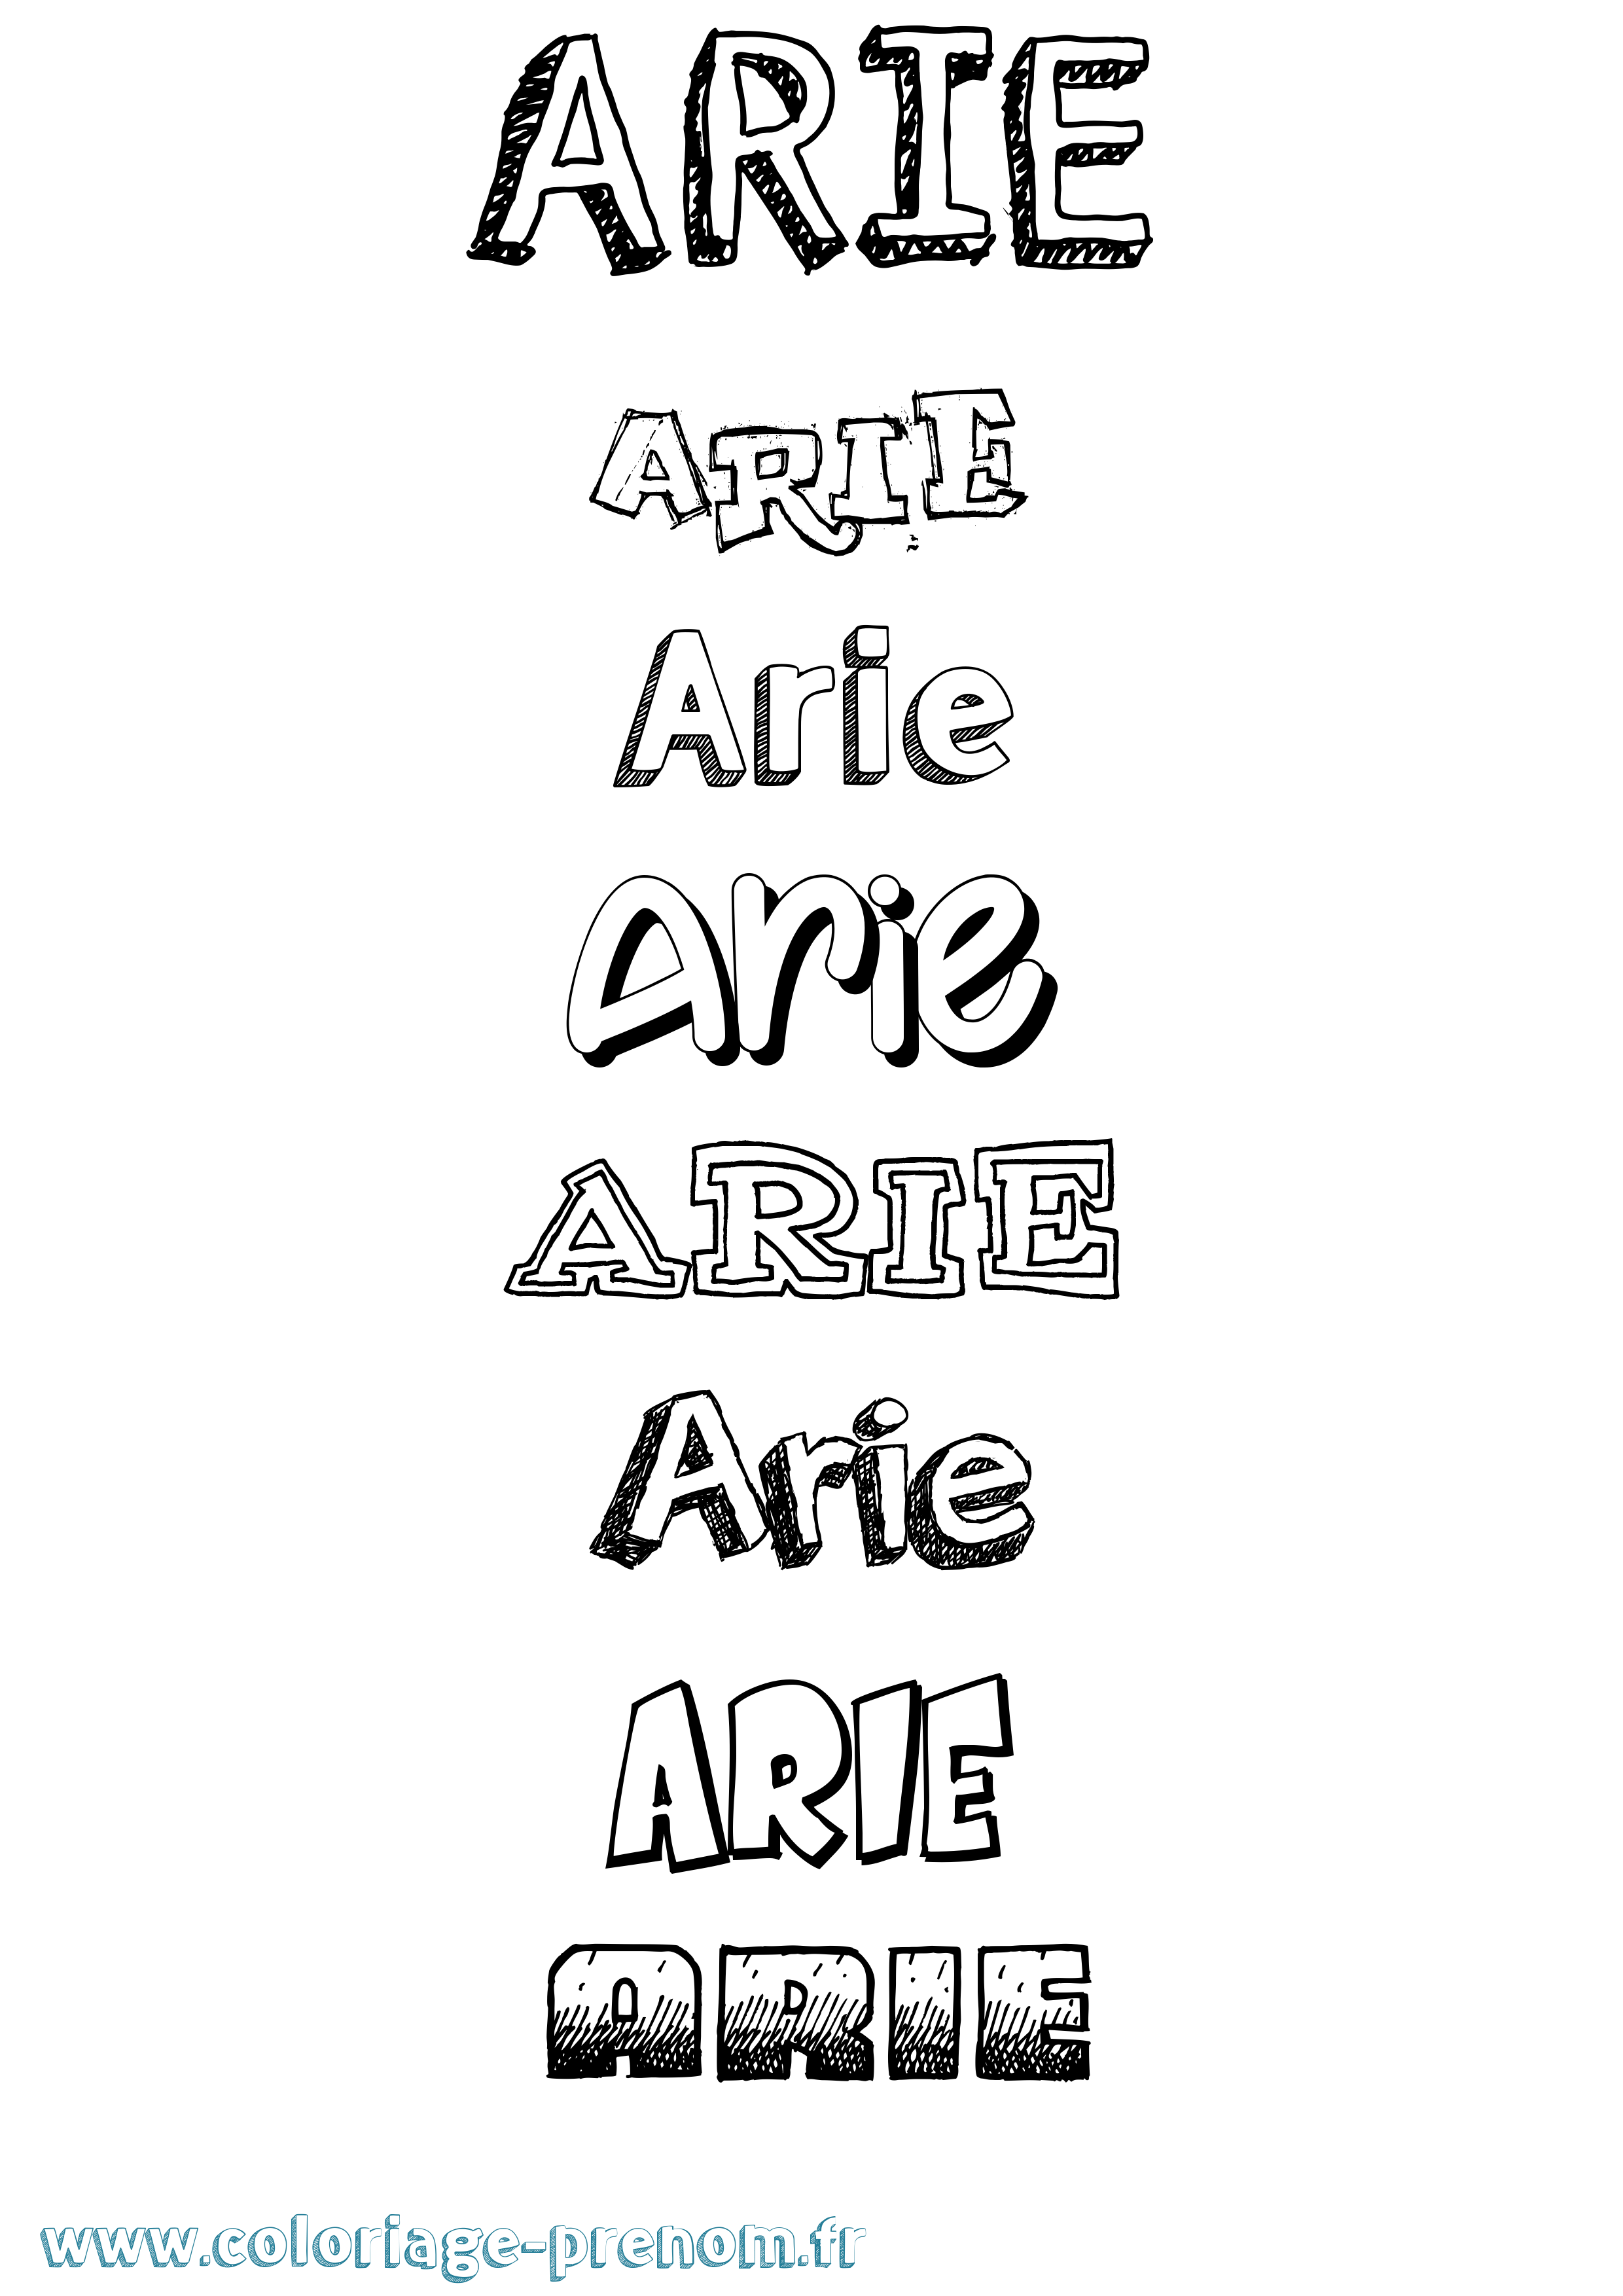 Coloriage prénom Arie